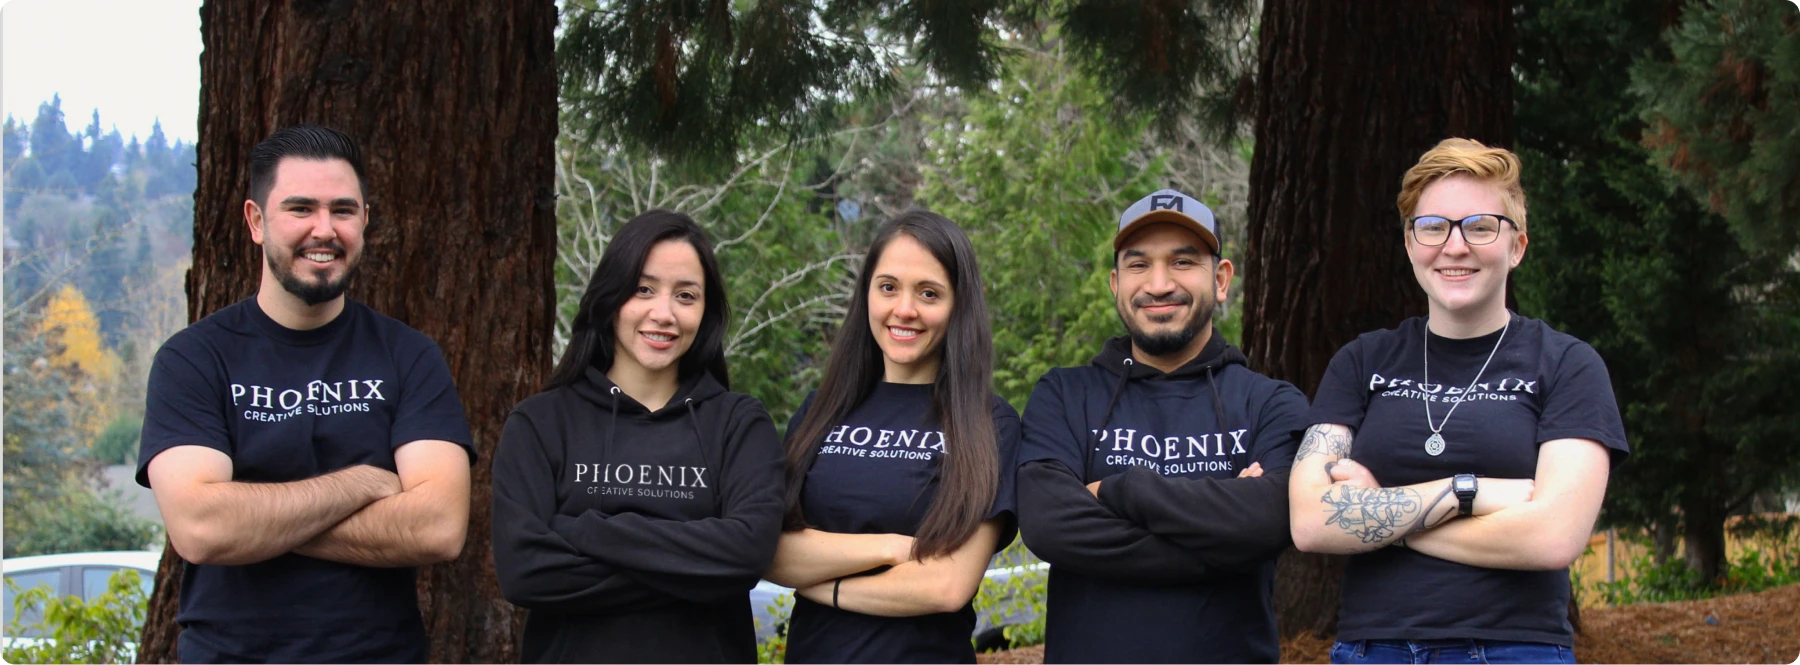 phoenix creative solutions team